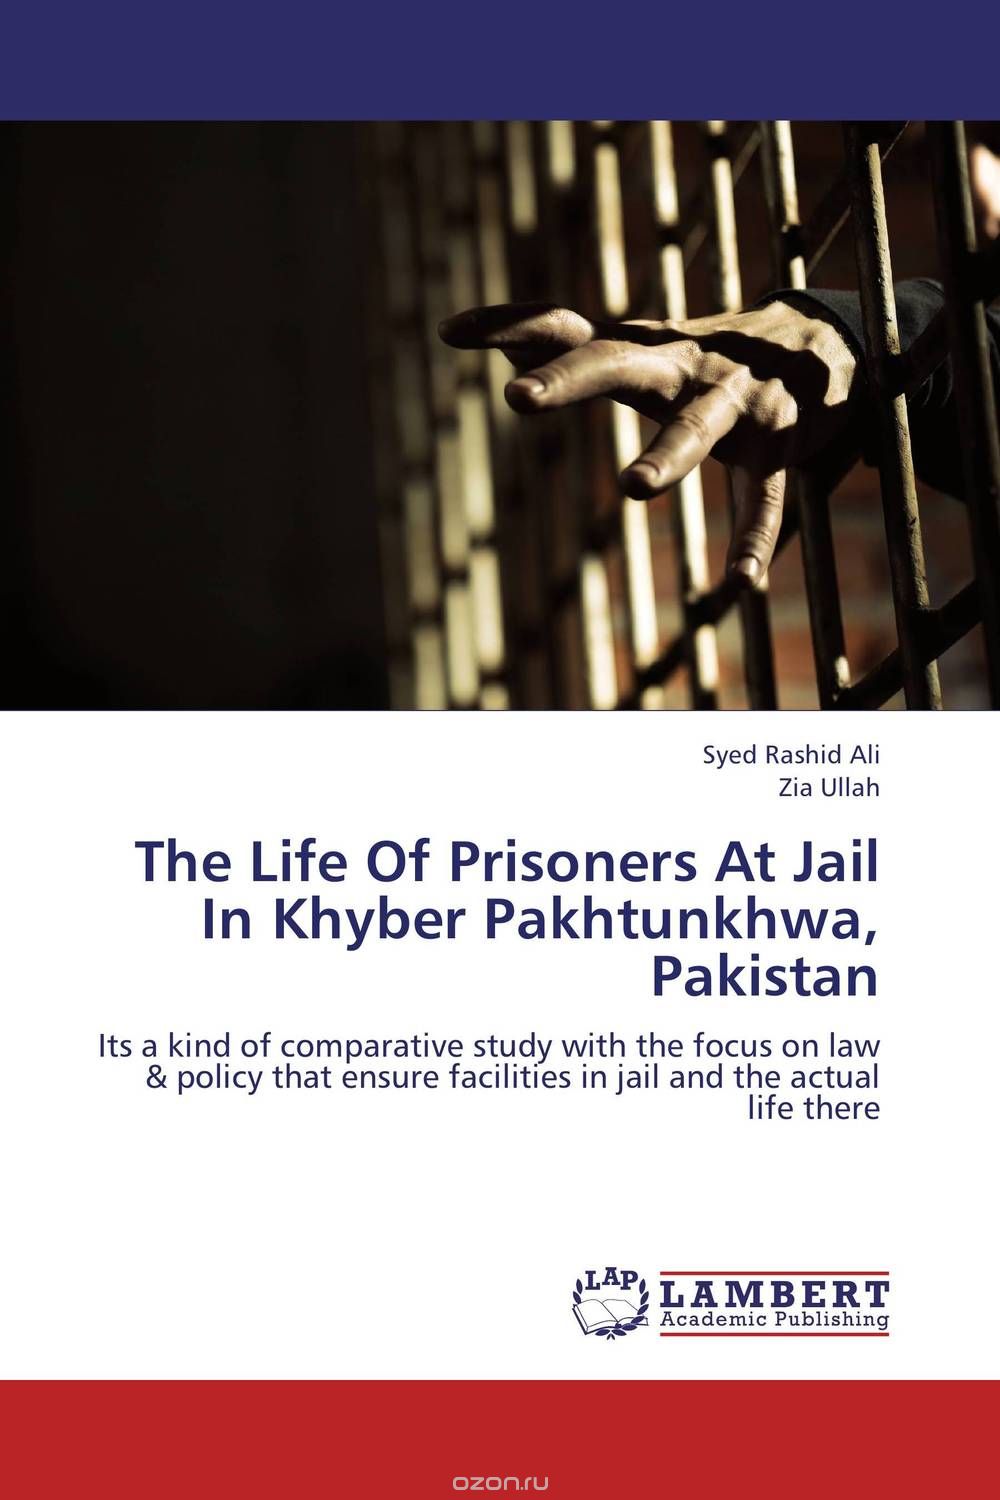 Скачать книгу "The Life Of Prisoners At Jail In Khyber Pakhtunkhwa, Pakistan"